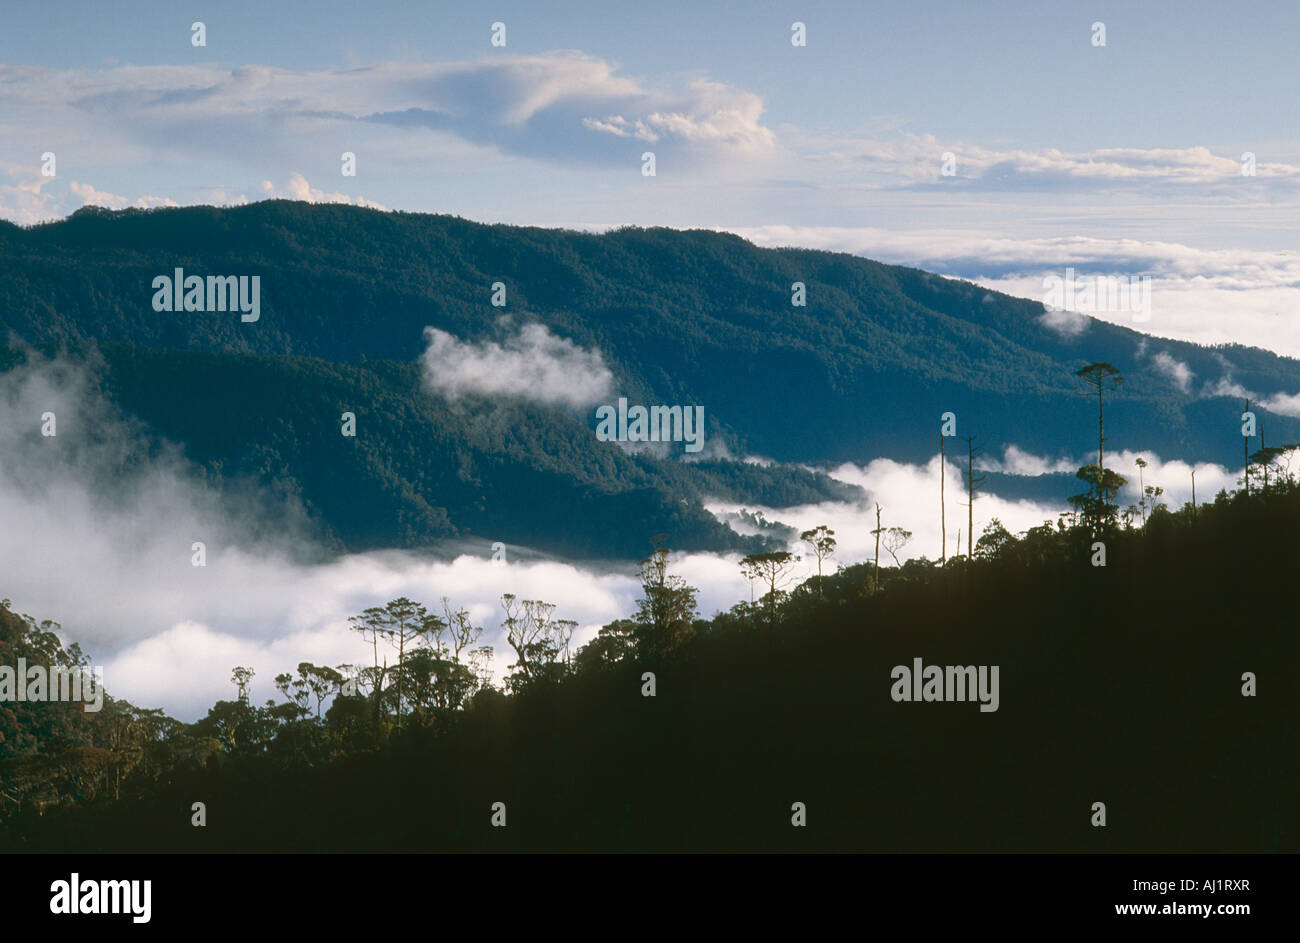 Tropical rain forest i nthe mountains of Irian Jaya, Indonesia. Stock Photo